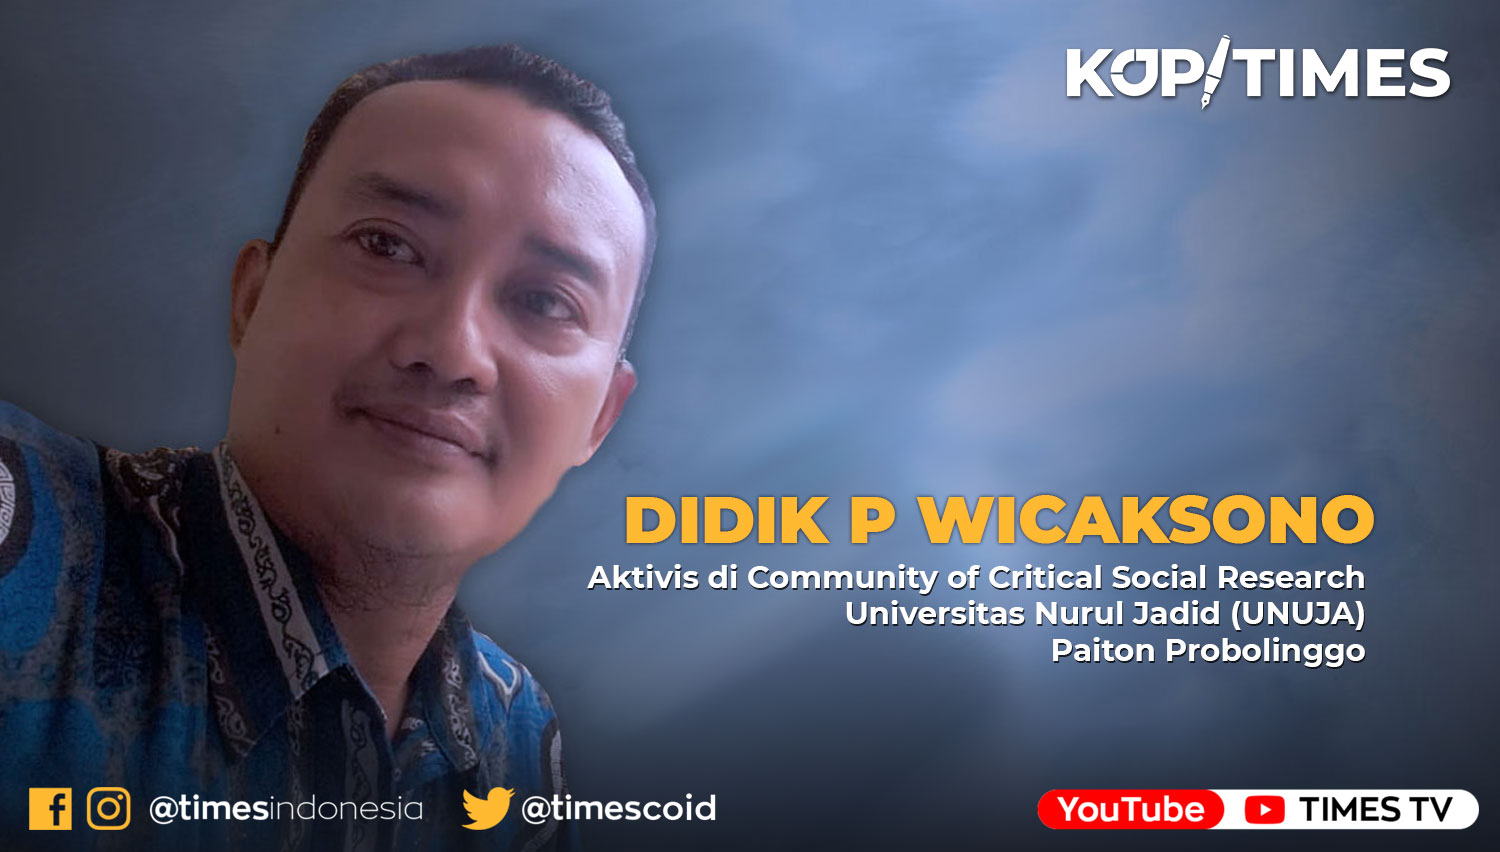 Didik P Wicaksono, Aktivis di Community of Critical Social Research Universitas Nurul Jadid (UNUJA) Paiton Probolinggo